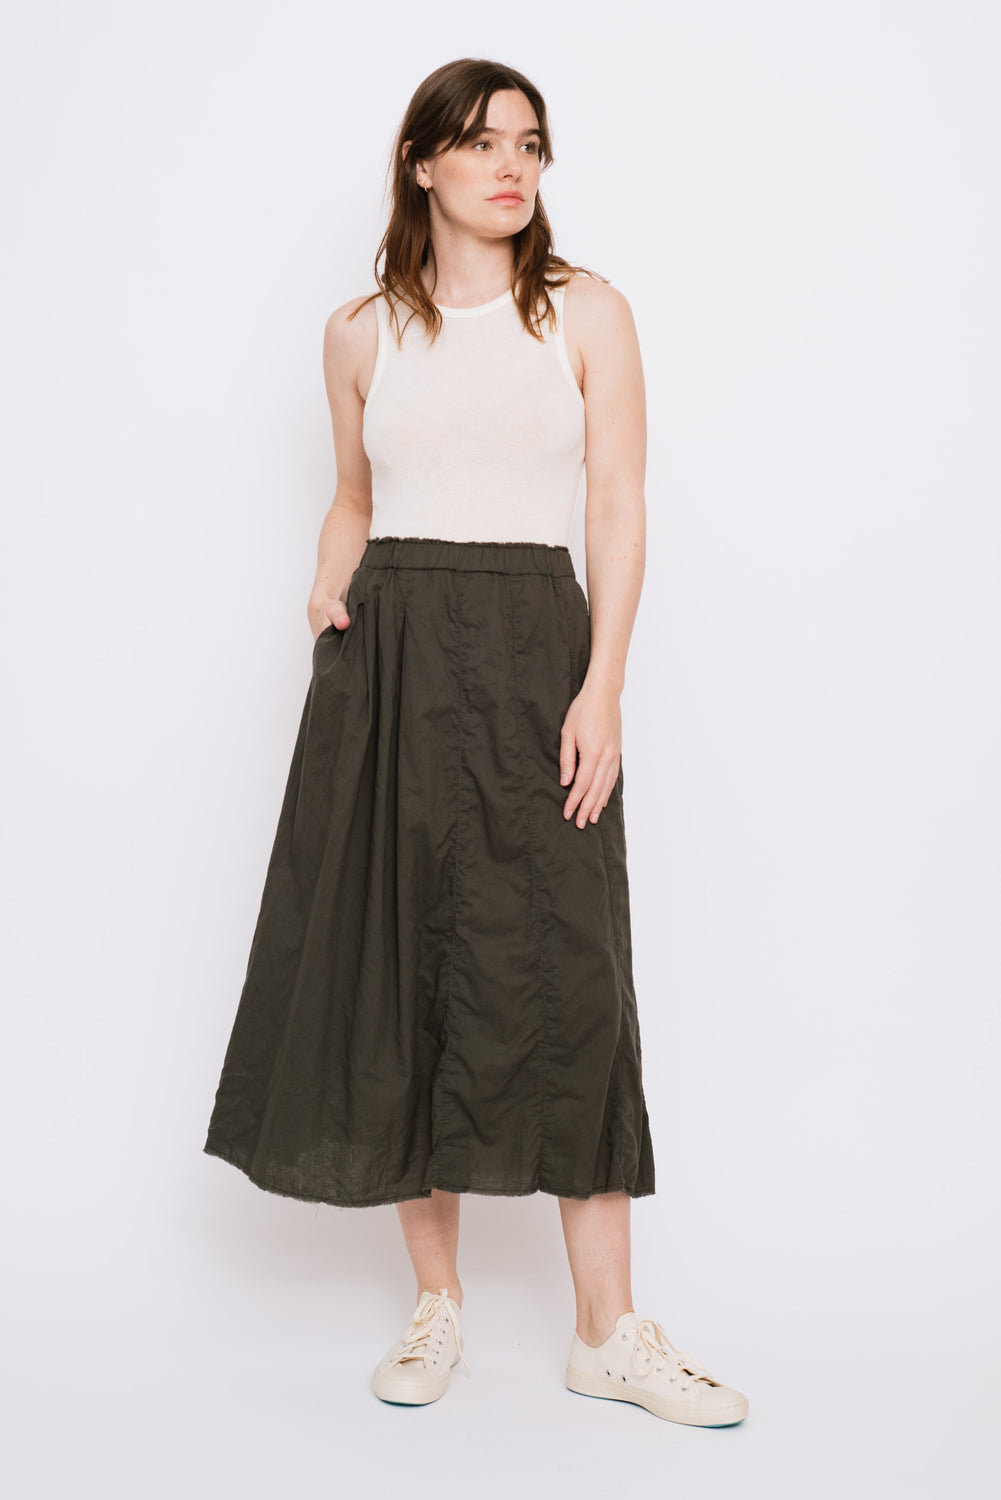 Cotton Skirt, Brown